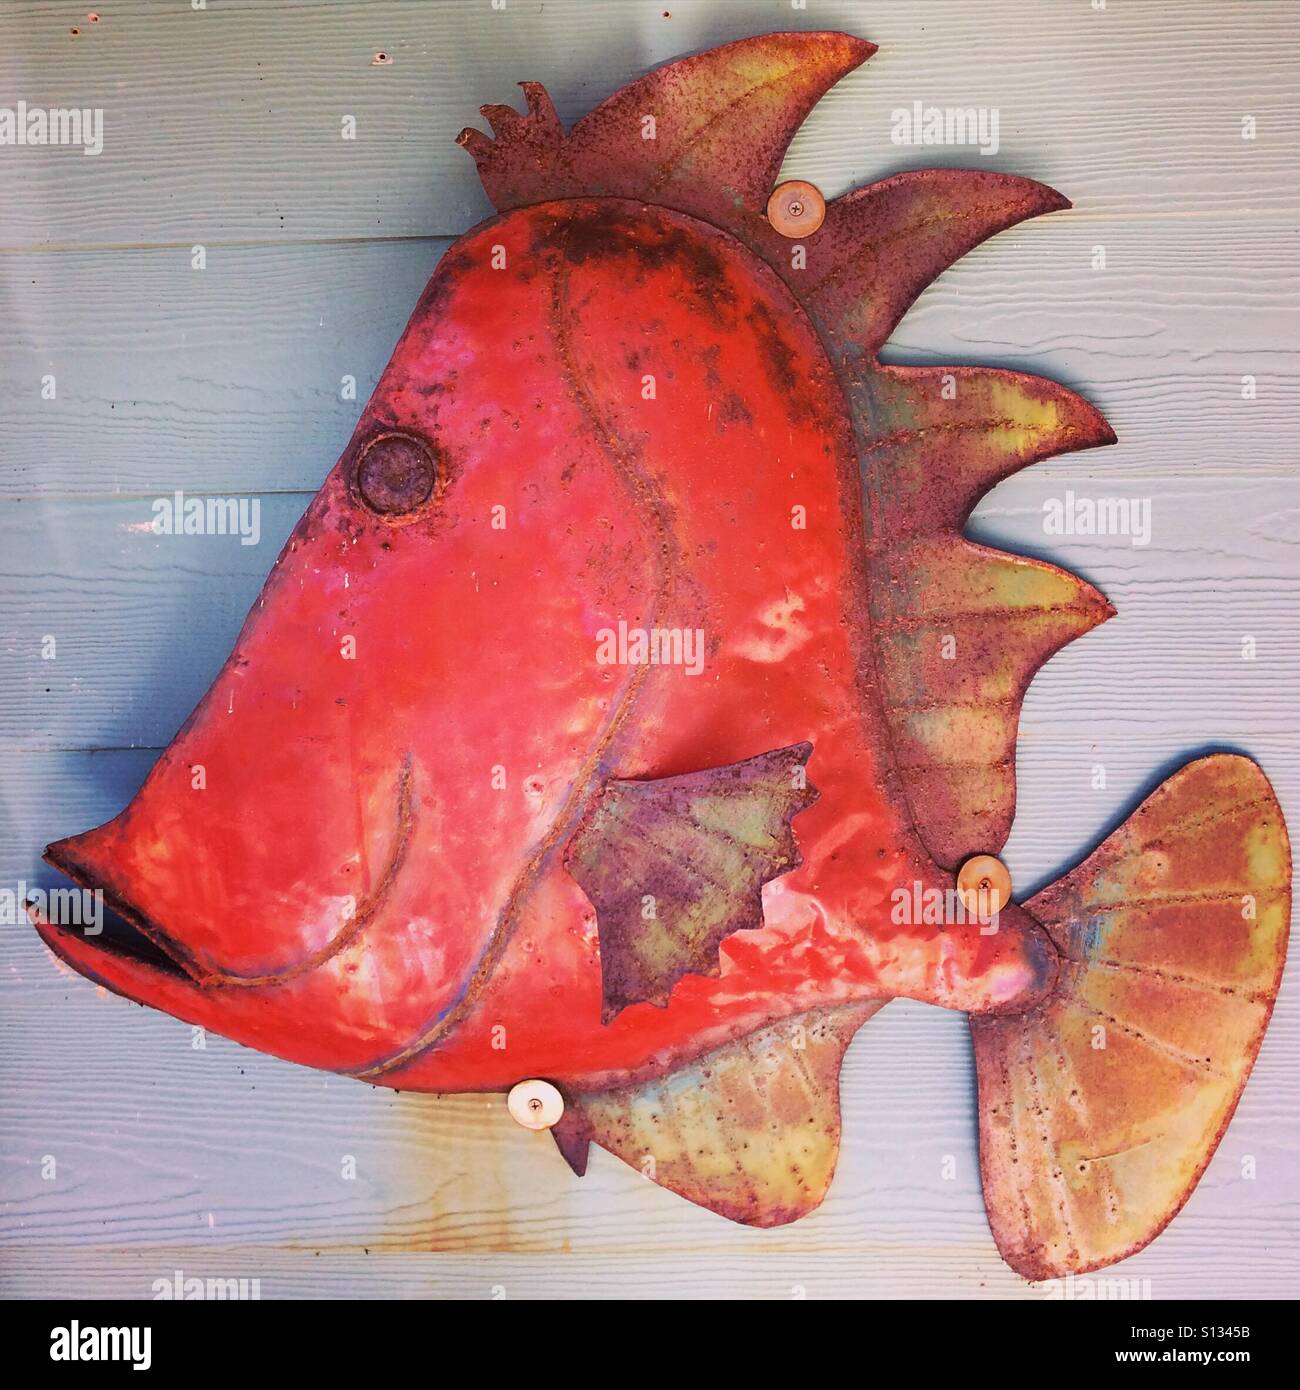 Big red fish art Stock Photo - Alamy